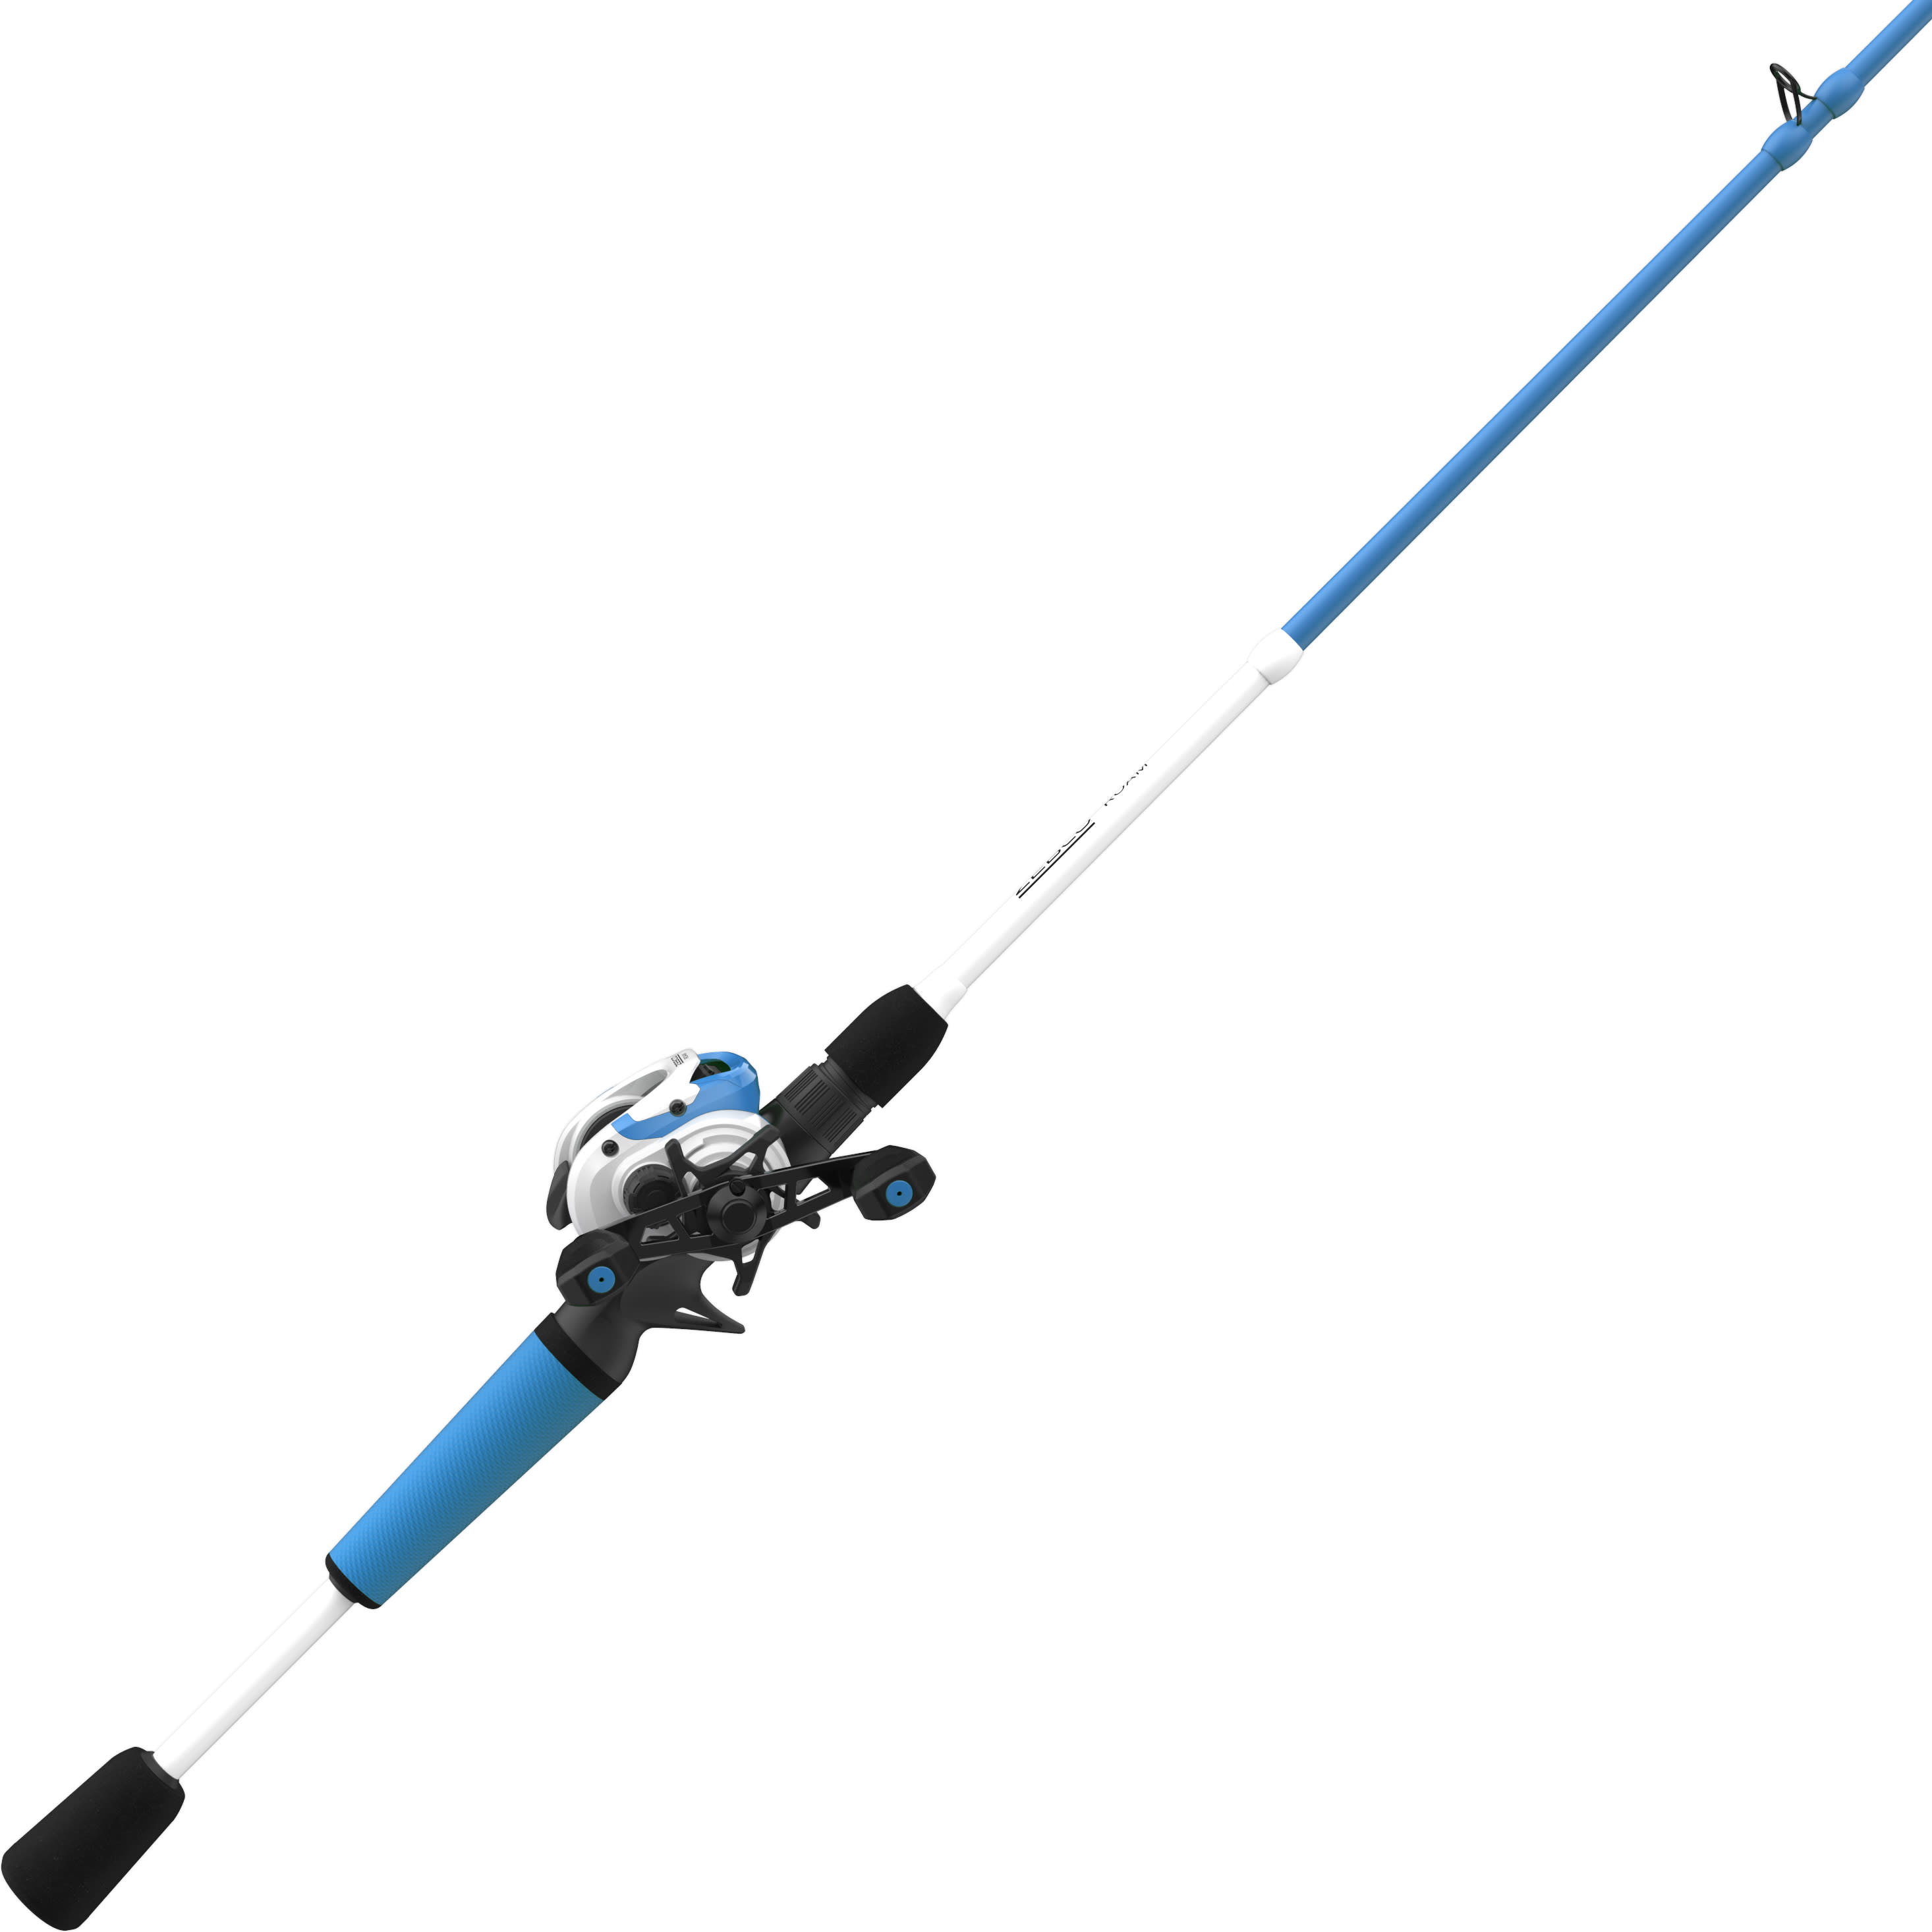  Zebco Roam Spincast Reel And Fishing Rod Combo, 6-Foot  2-Piece Fiberglass Fishing Pole